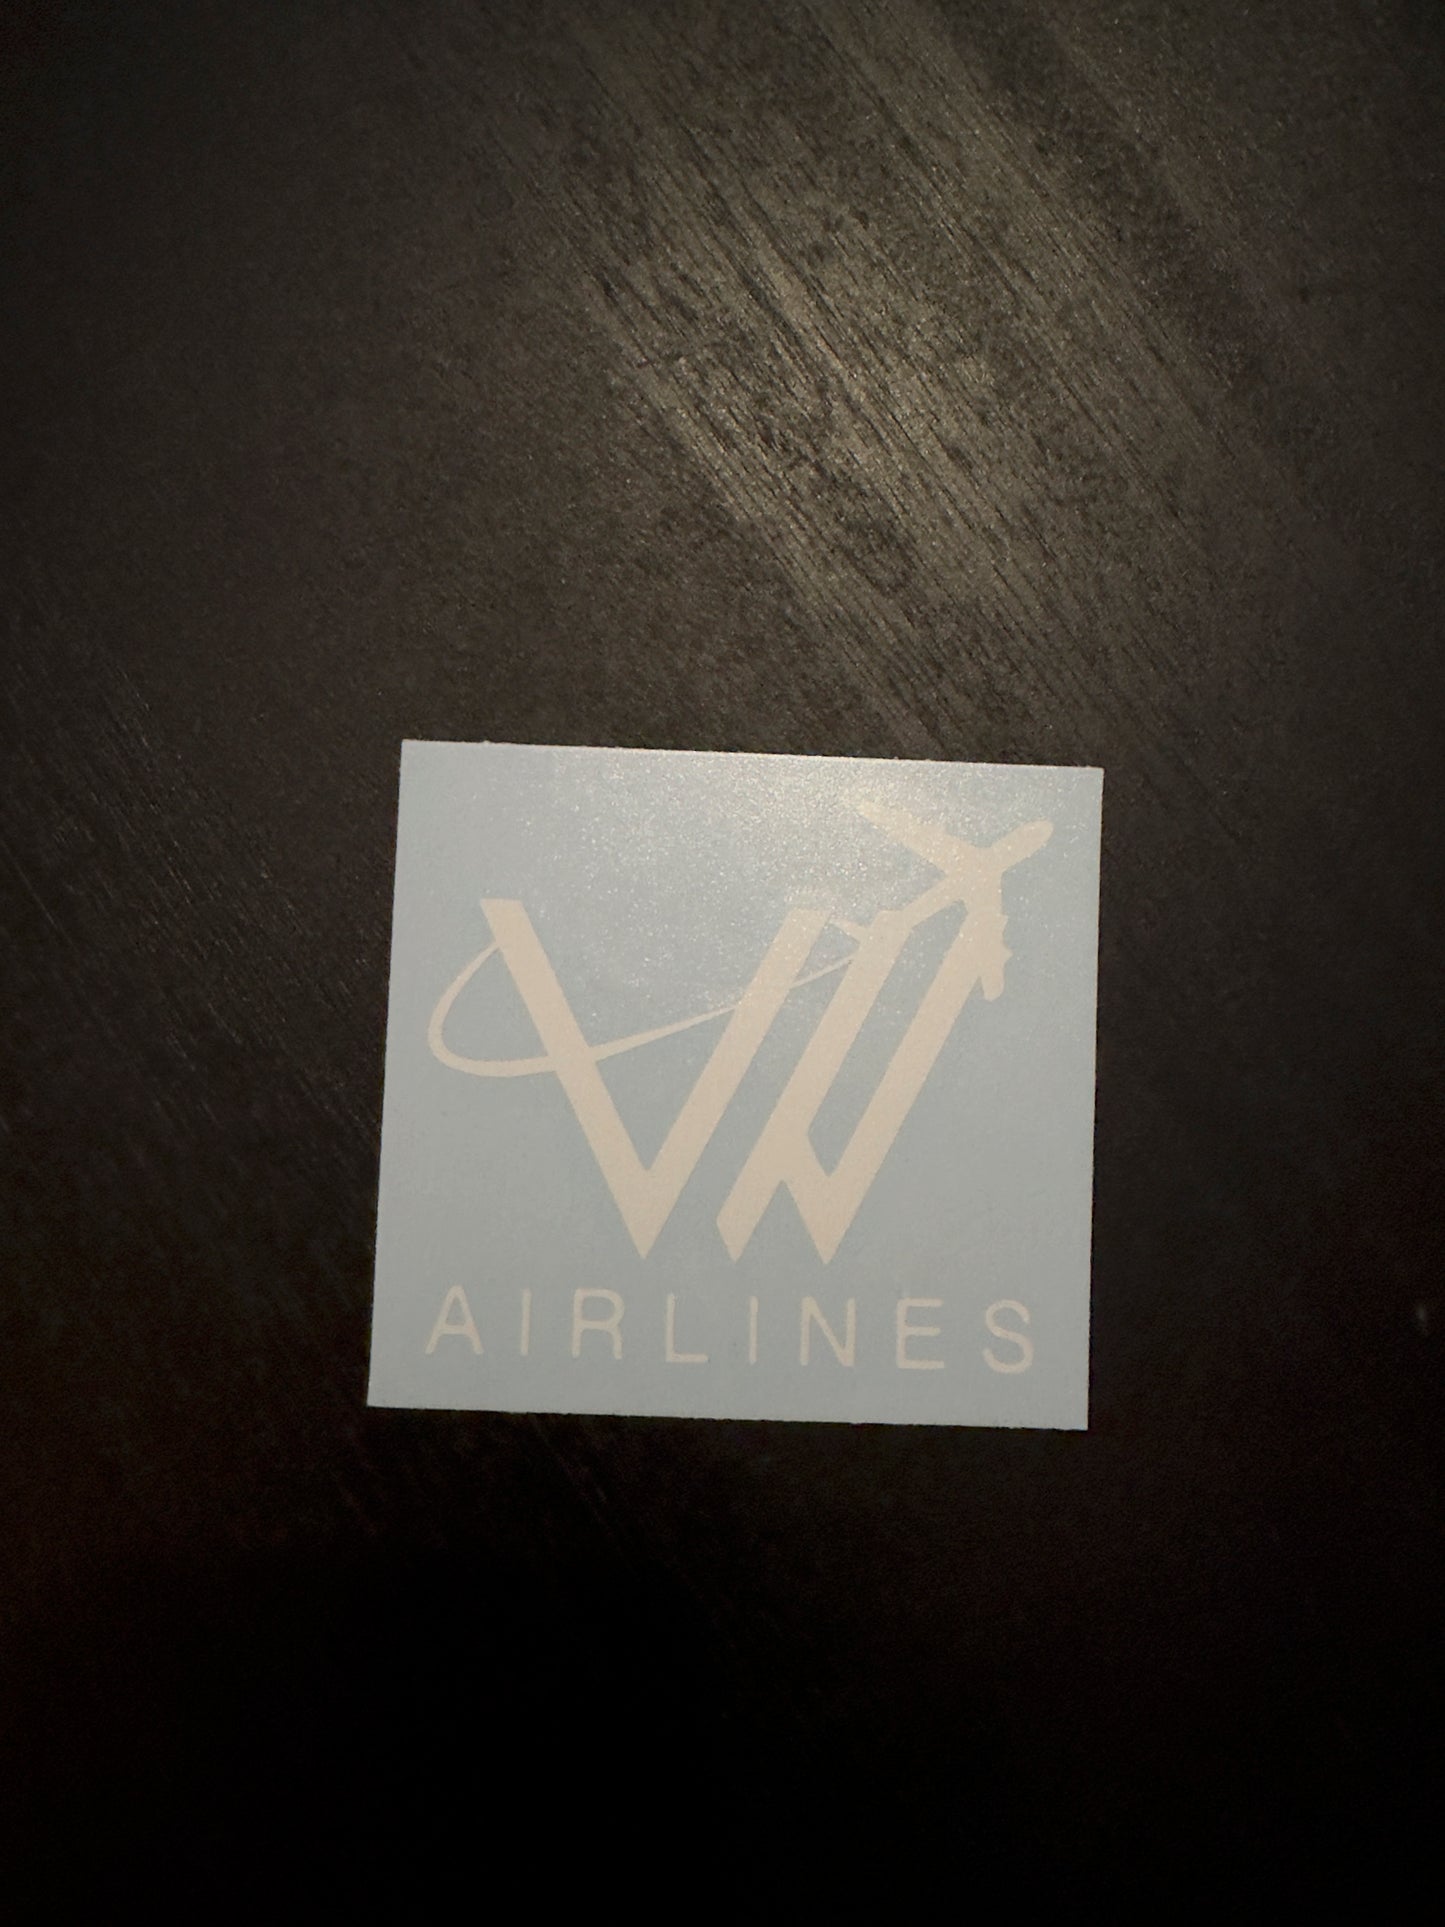 VW Airlines sticker